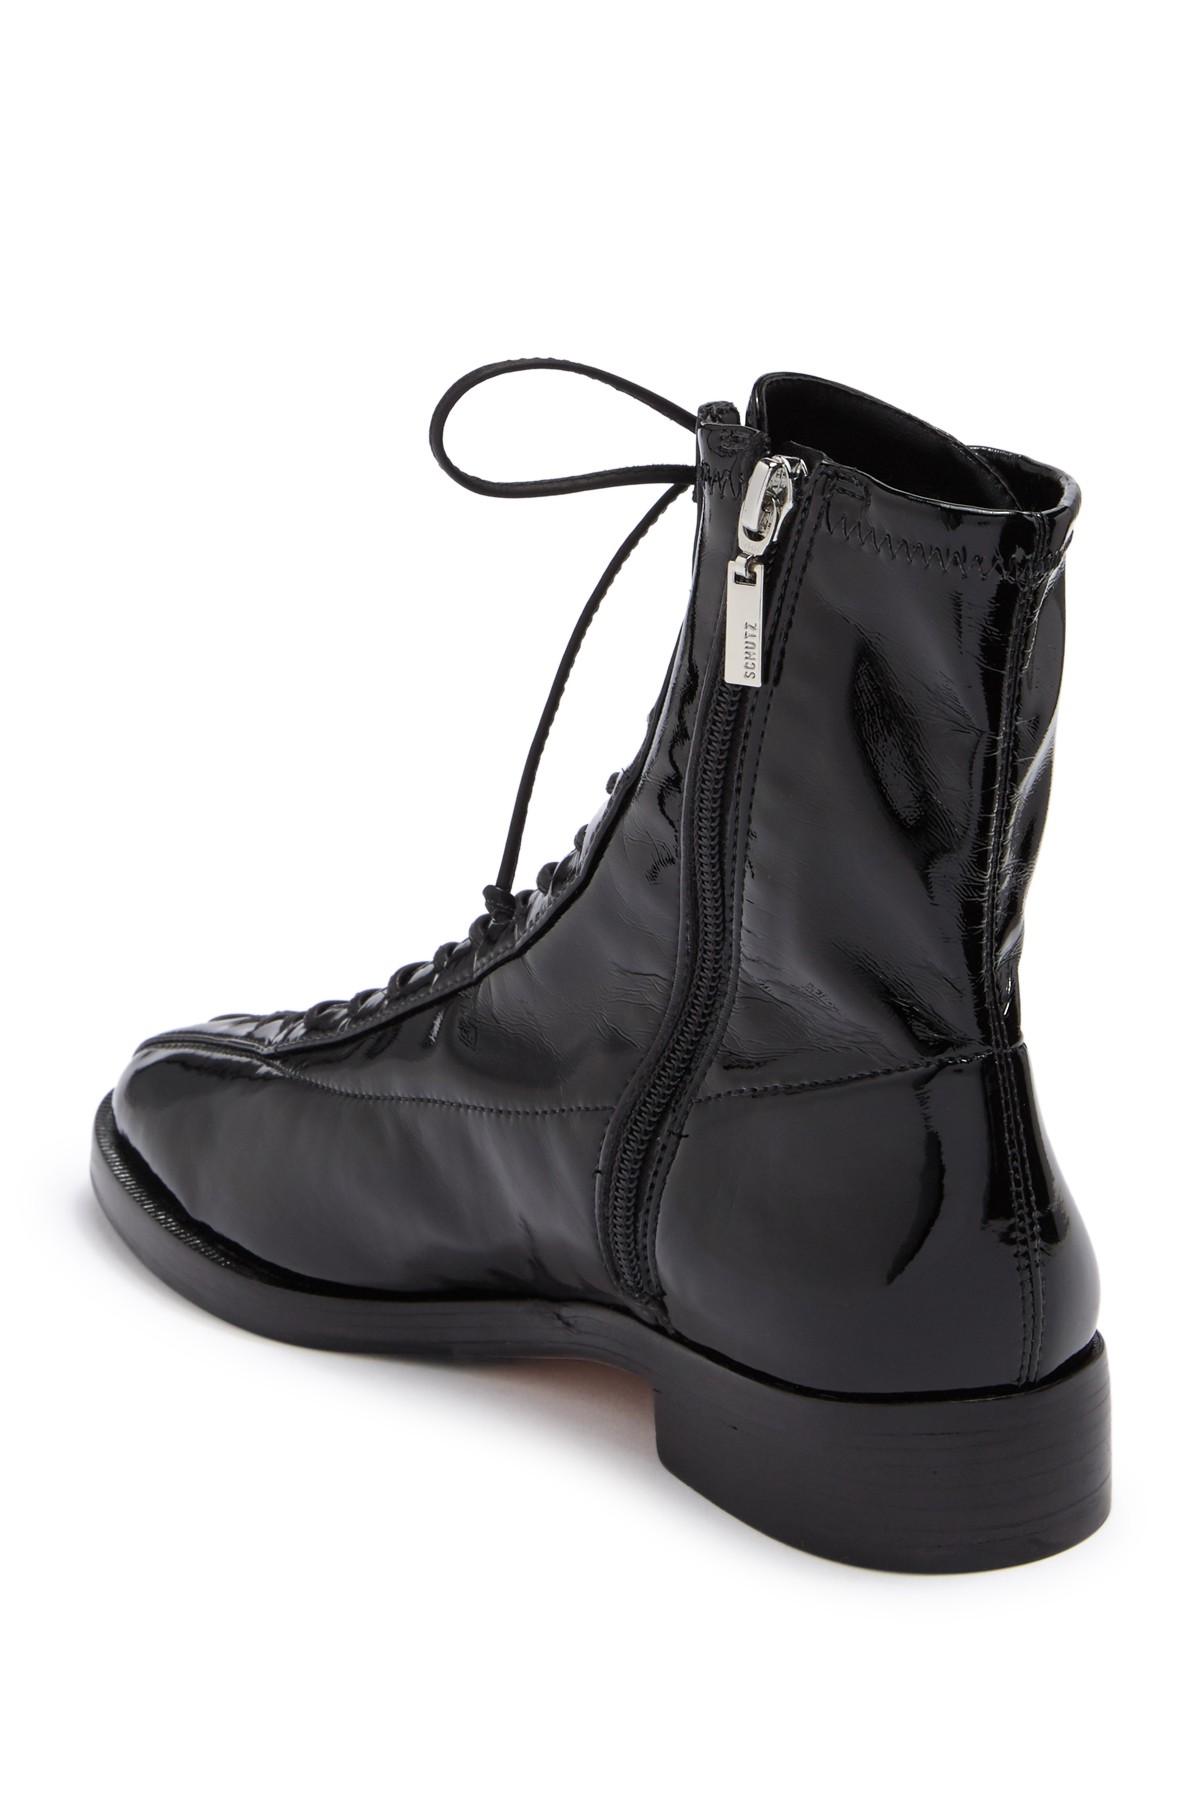 Schutz Regine Patent Lace-up Boot in Black | Lyst